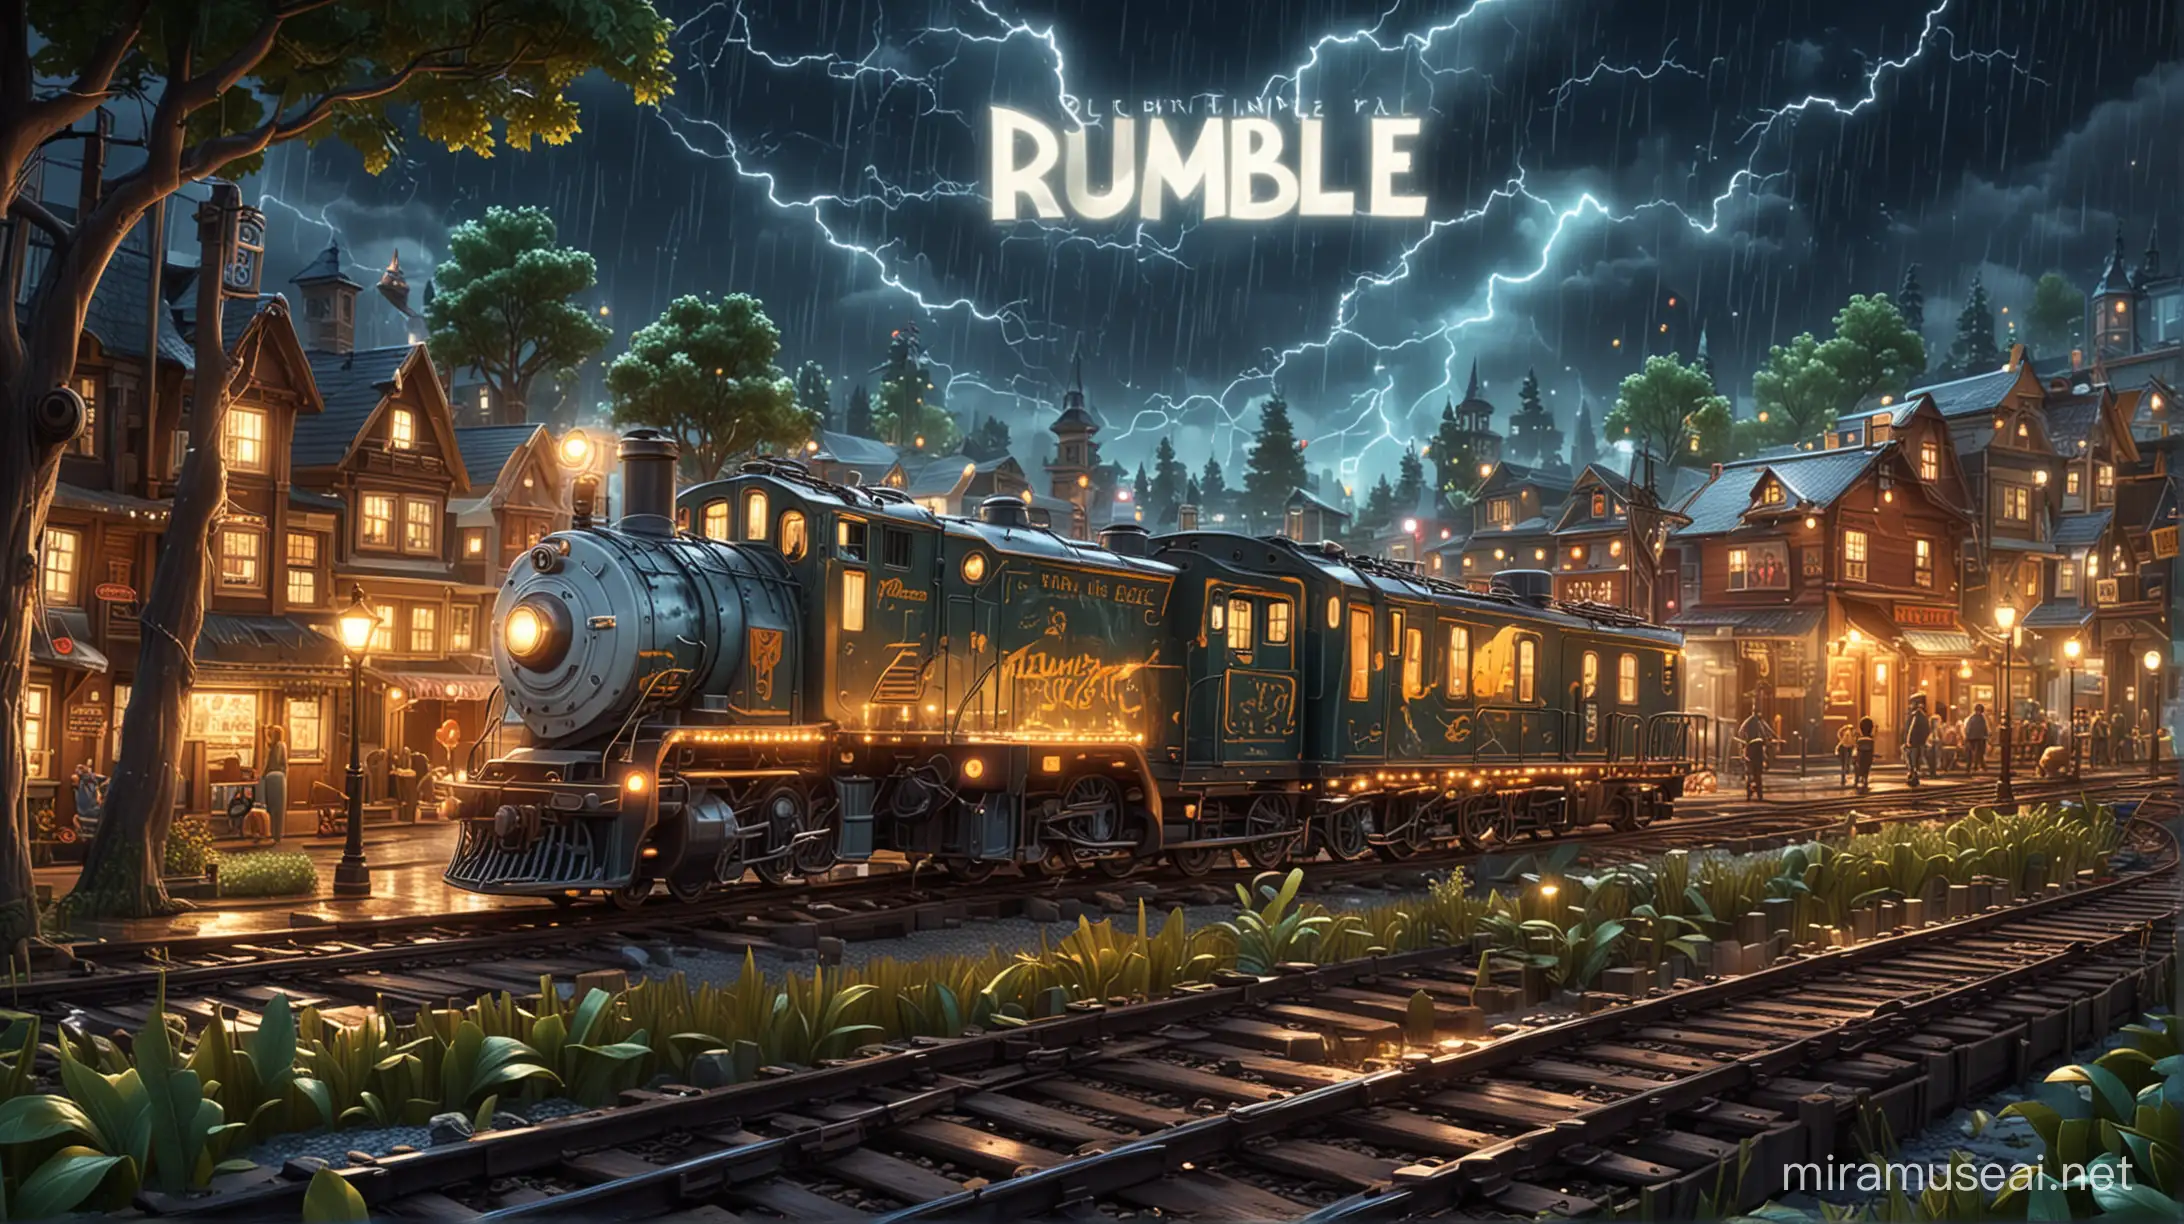 Cartoon City Night Scene with Lightning Storm and RUMBLE PLAYZ